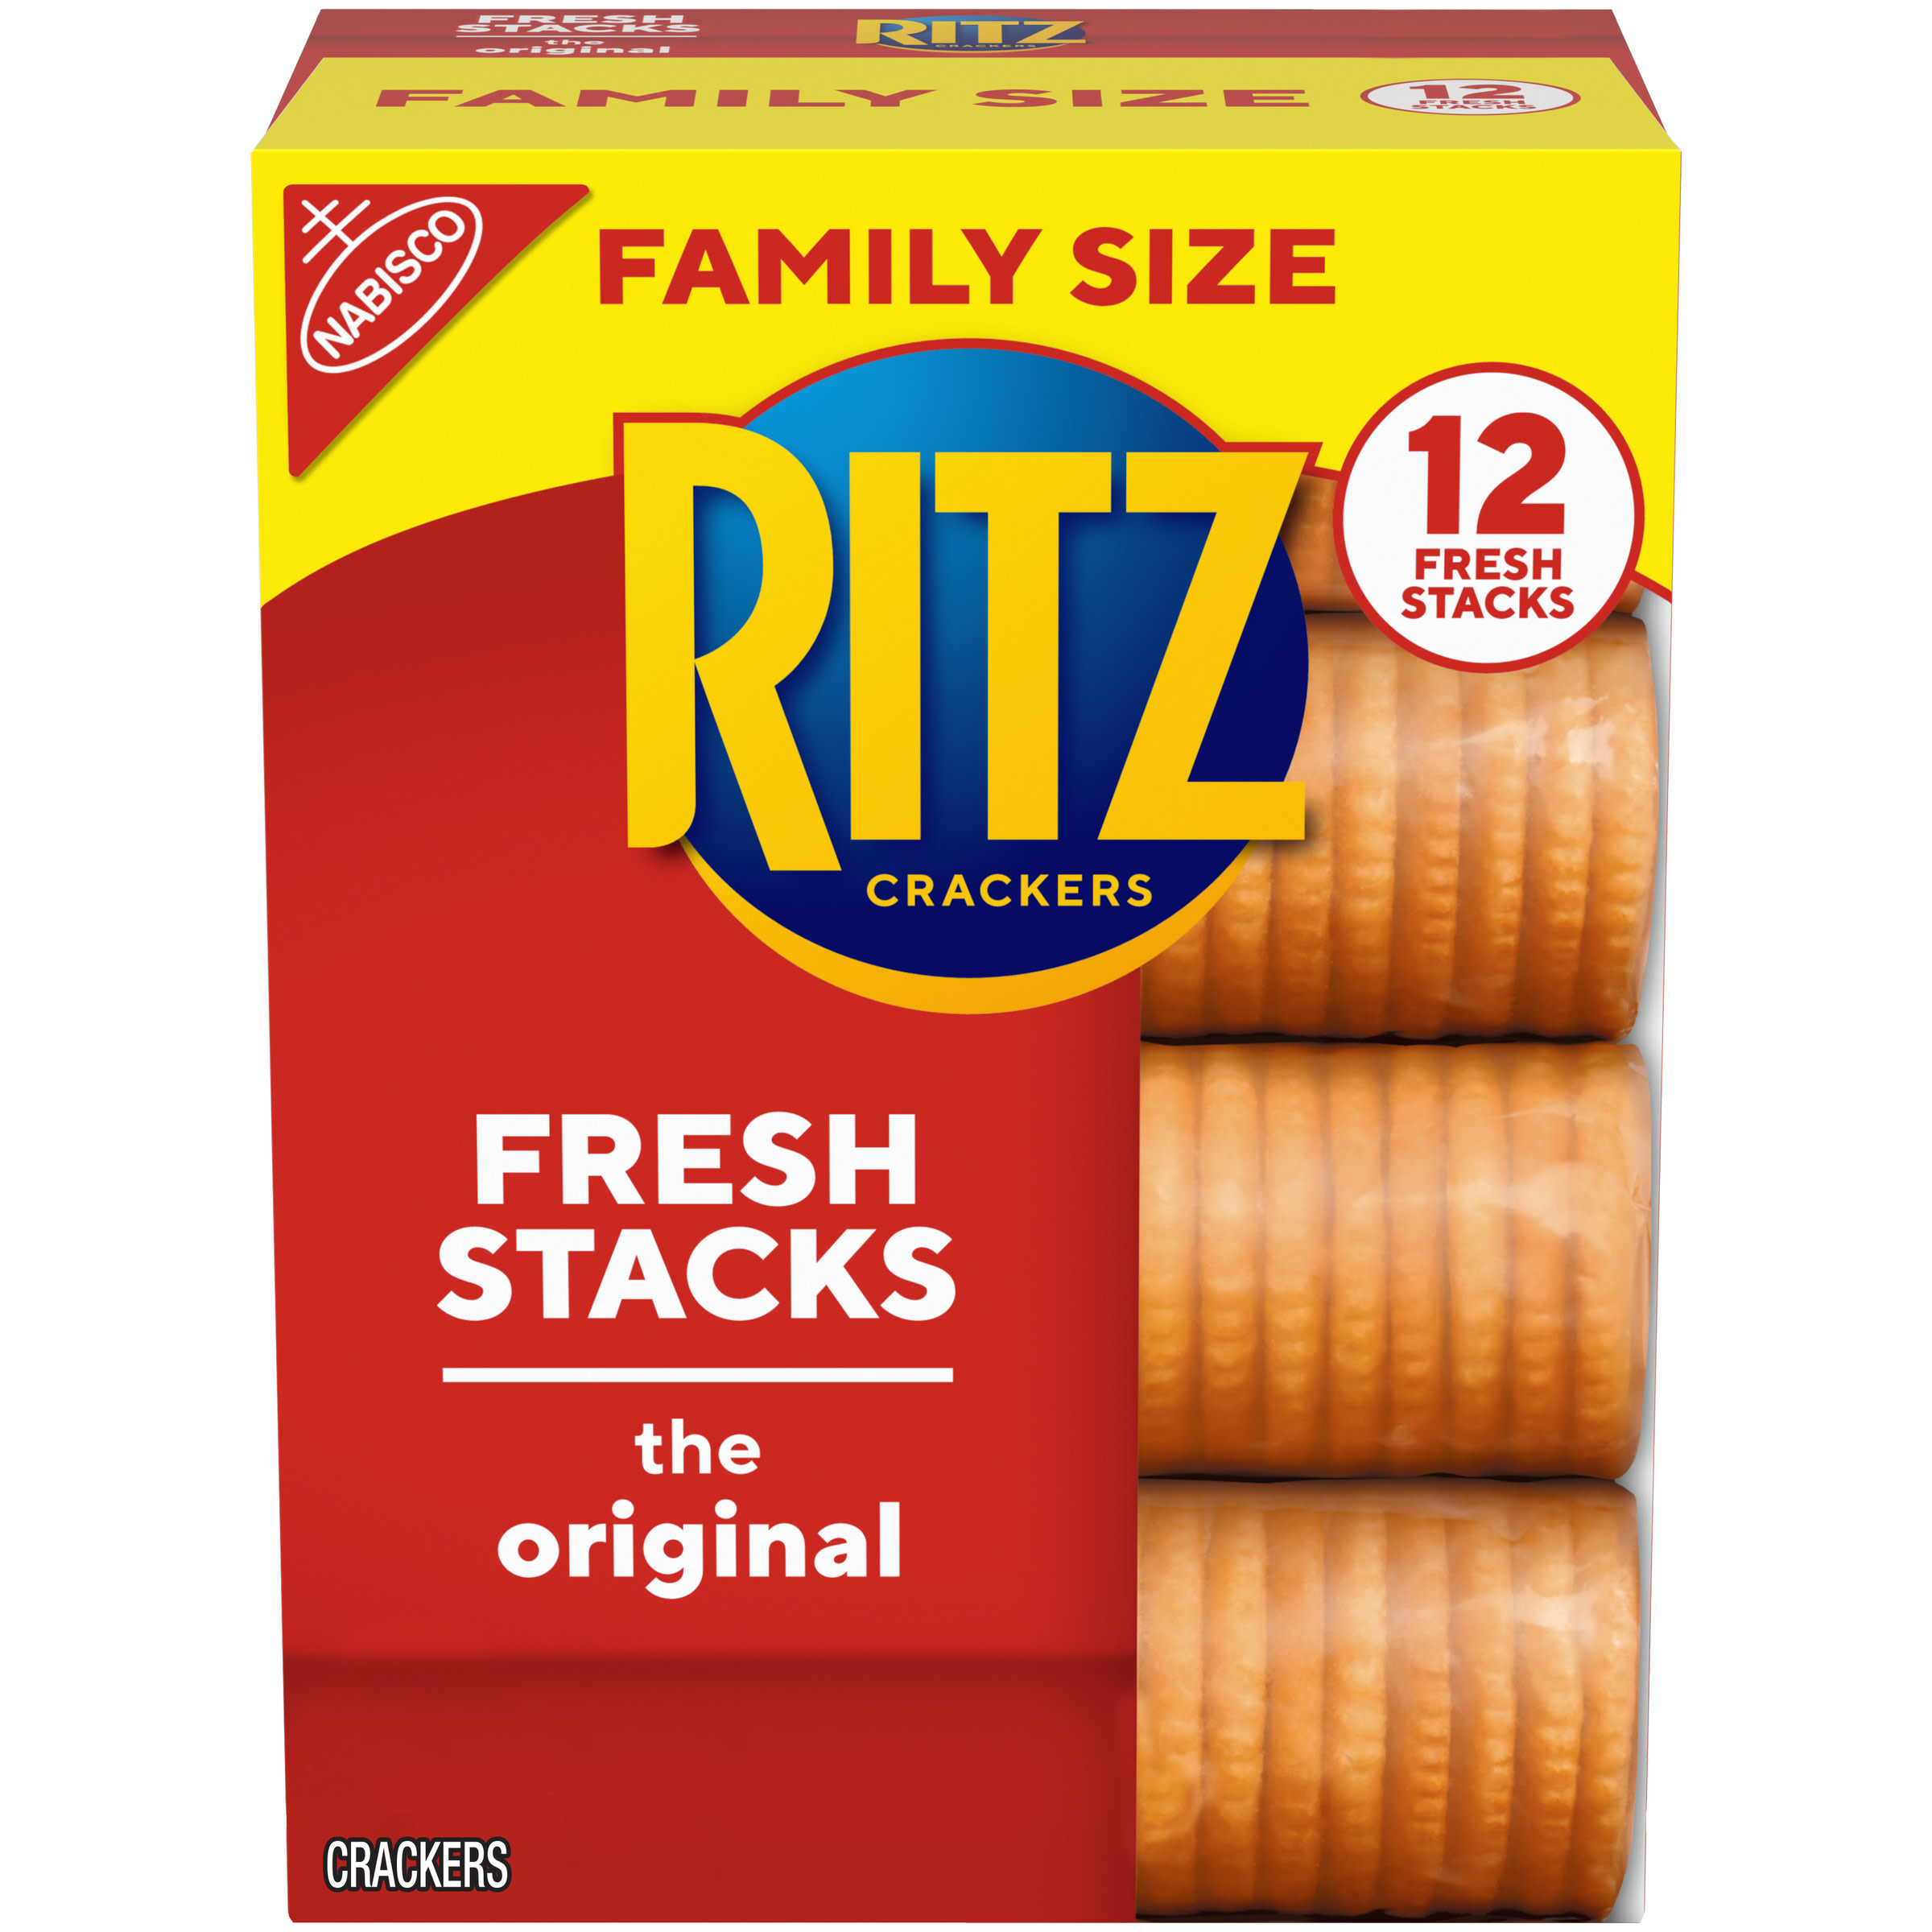 RITZ Fresh Stacks Original Crackers, Family Size, 17.8 oz - image 1 of 17